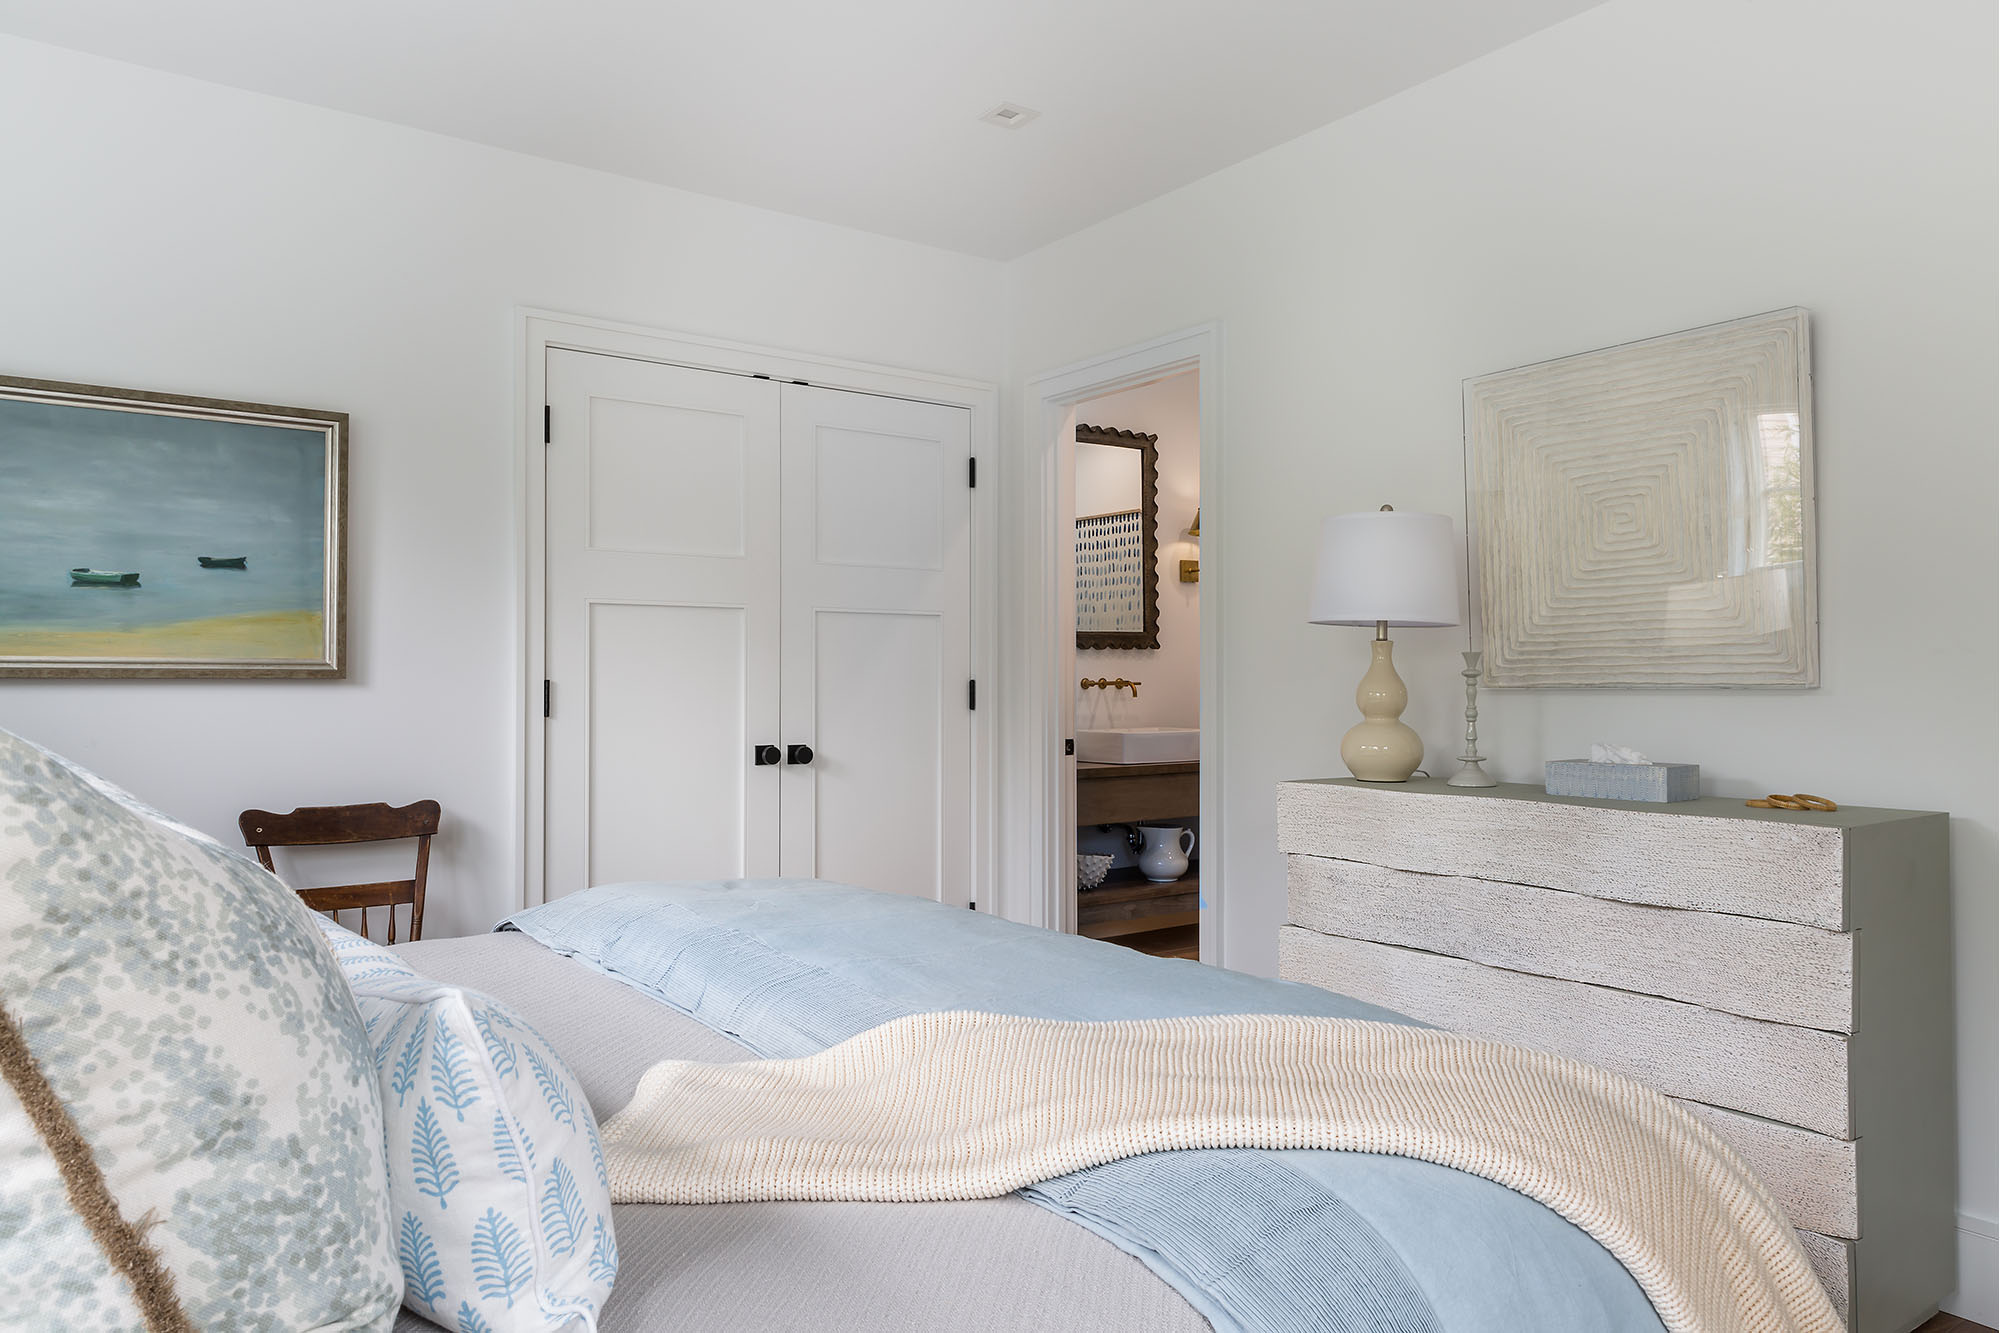 White and blue designed bedroom